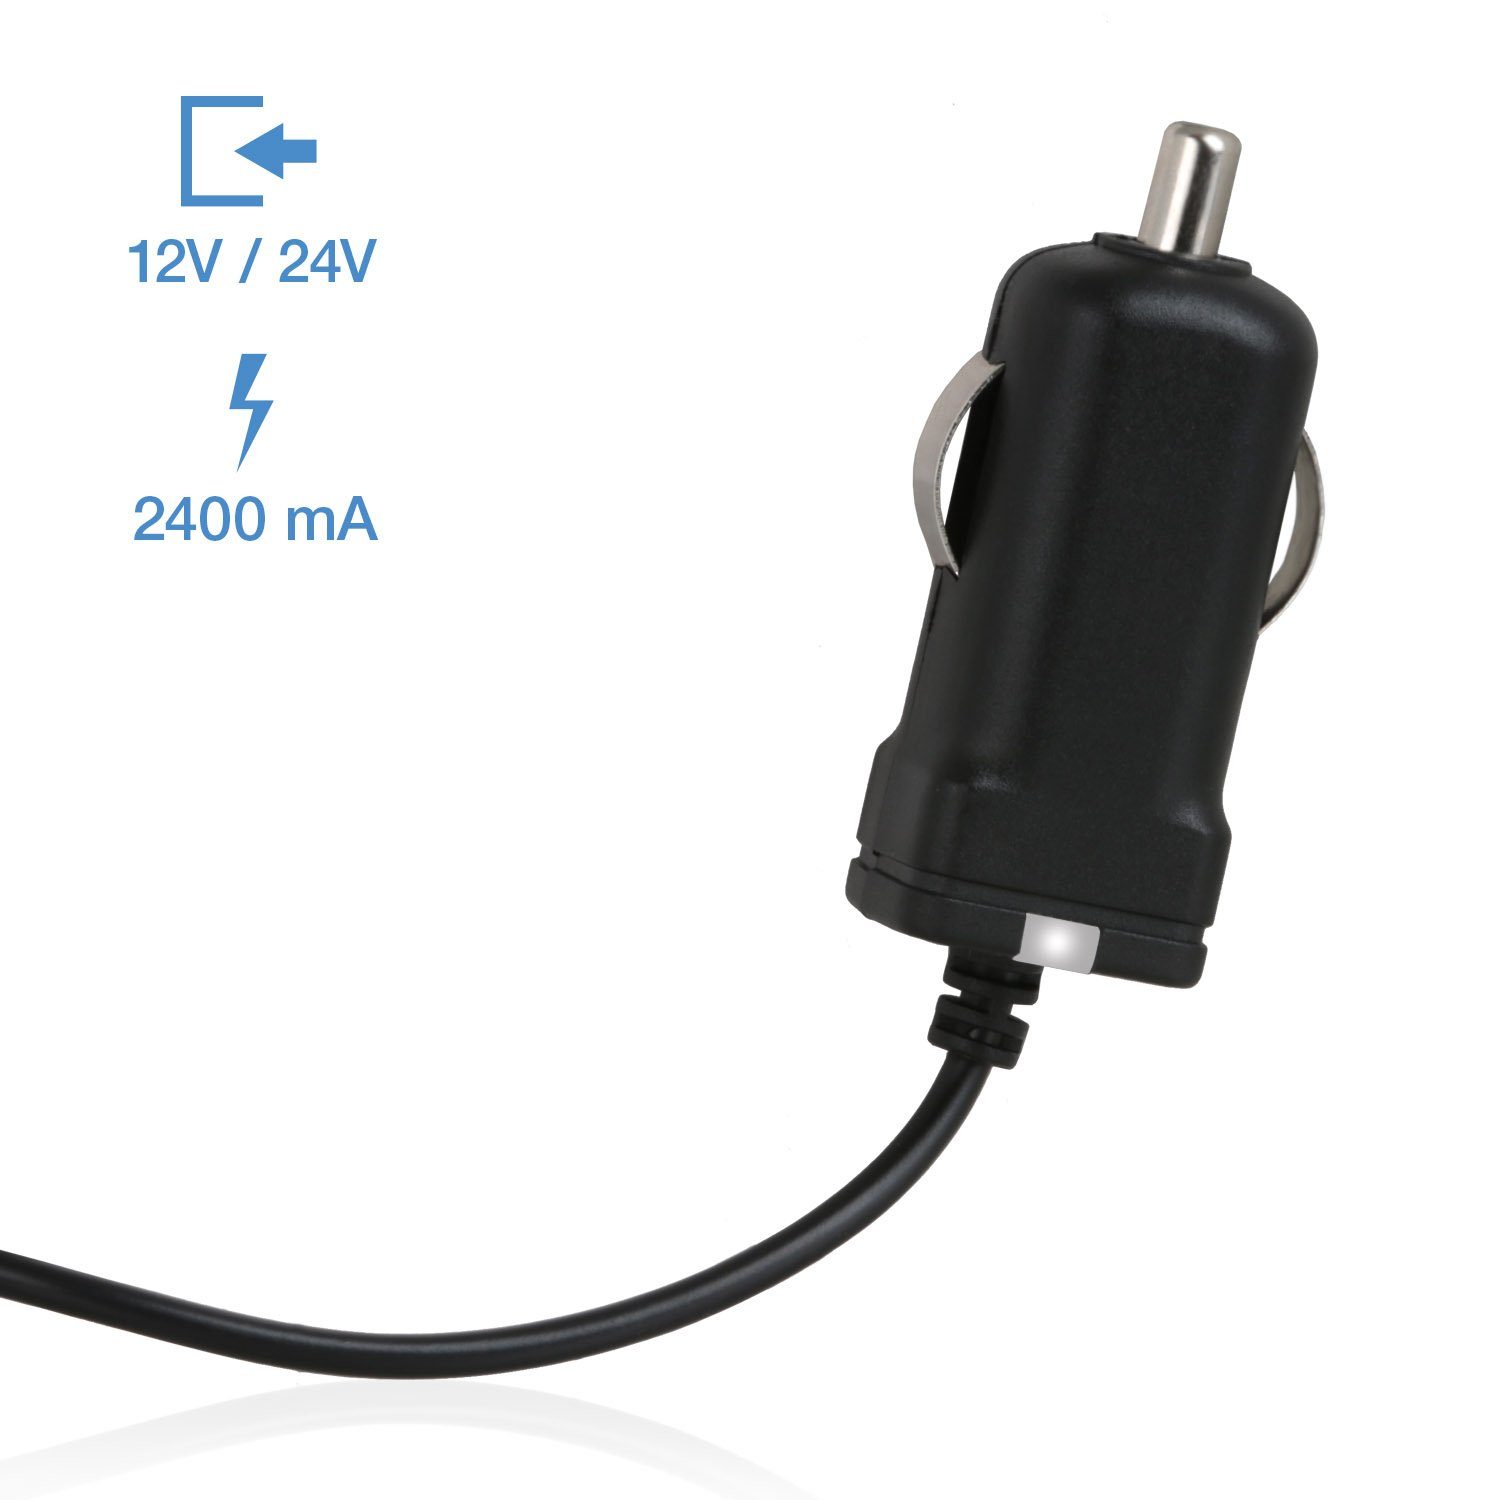 Kfz USB Adapter Zigarettenanzünder Mini Auto Ladegerät 1000mA 12V ultraflach 